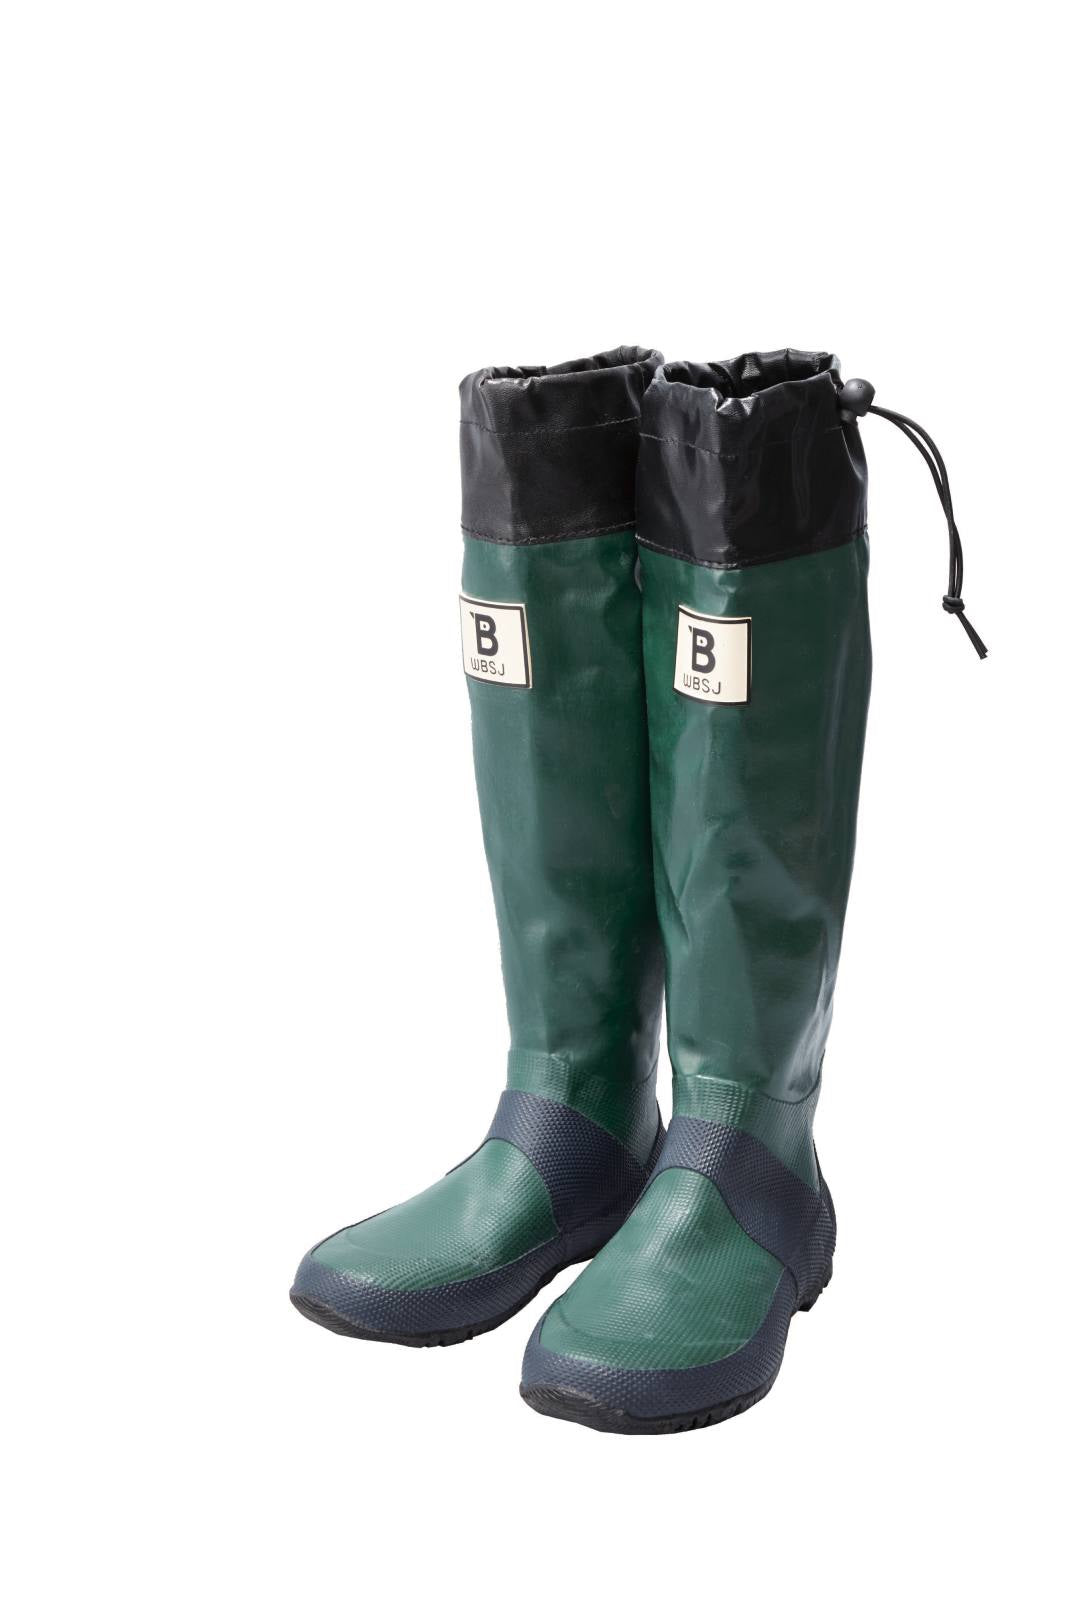 WBSJ Rain Boots Green